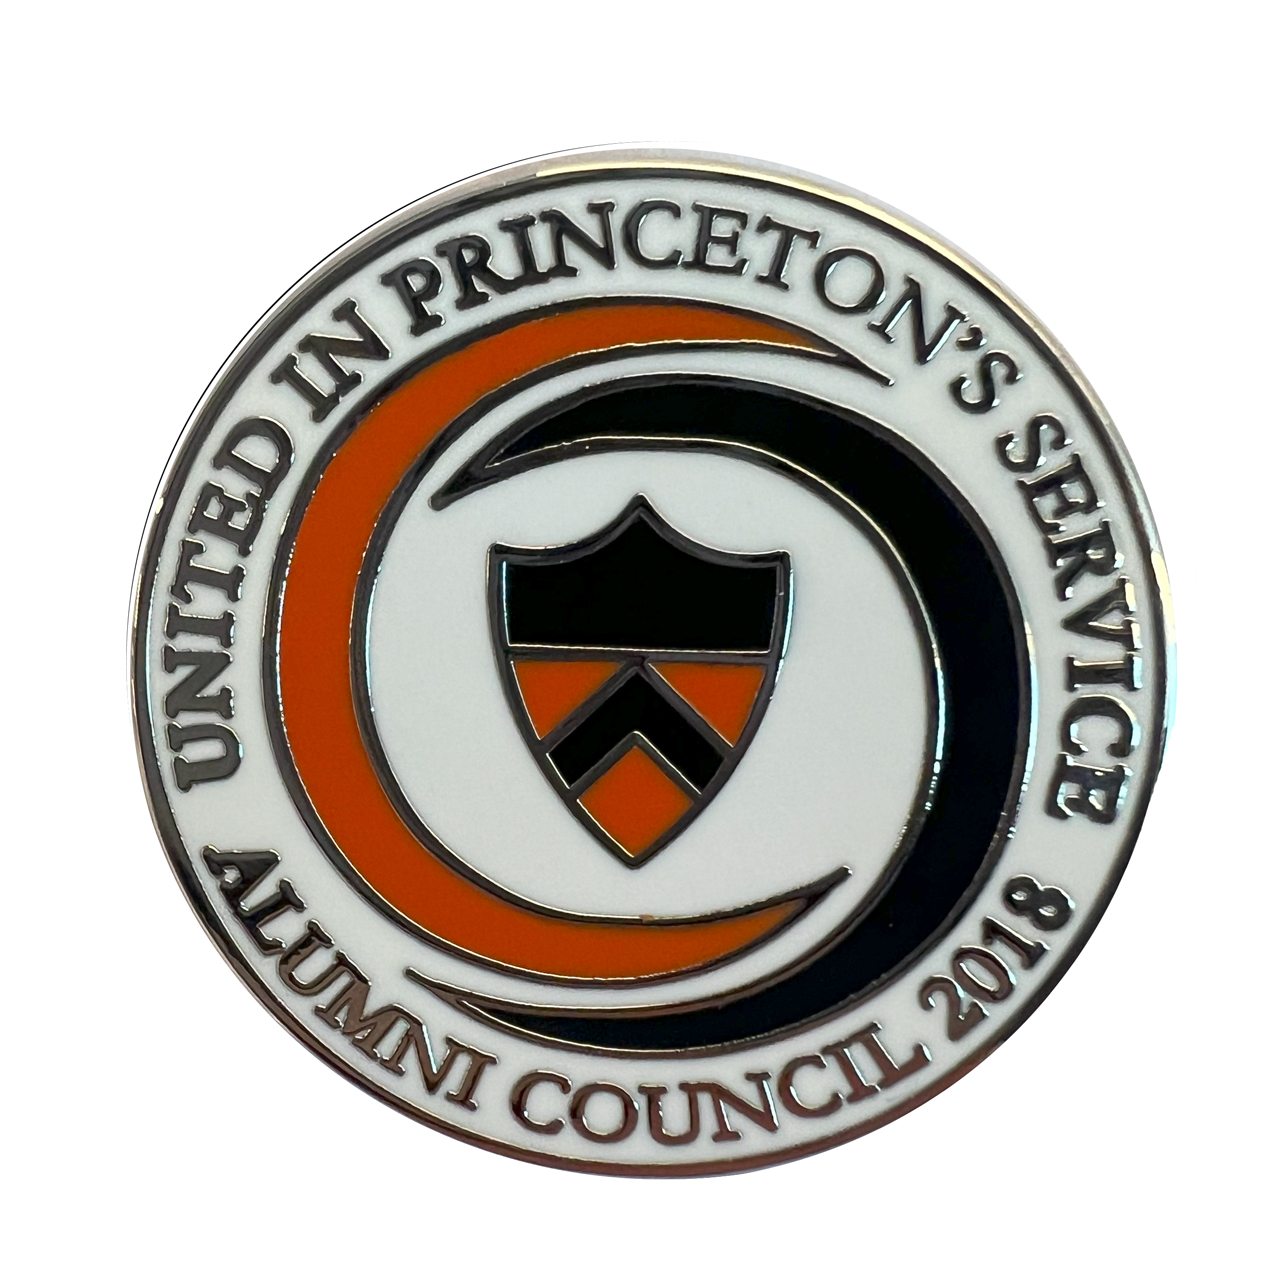 2018 Alumni Council Executive Committee (ACEC) Pin